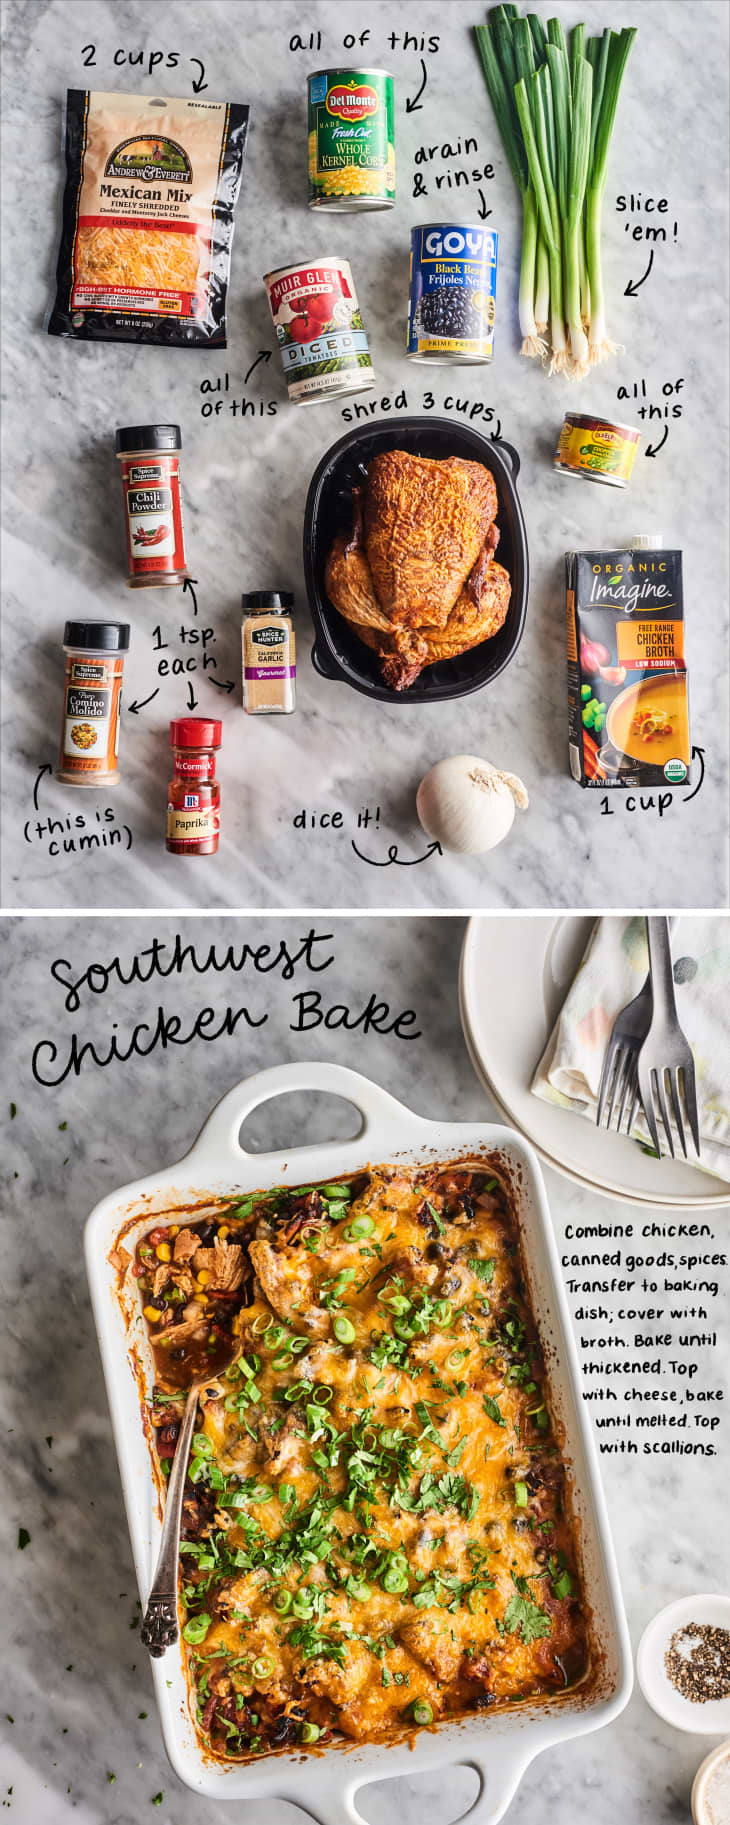 southwest chicken bake ingredients and dish